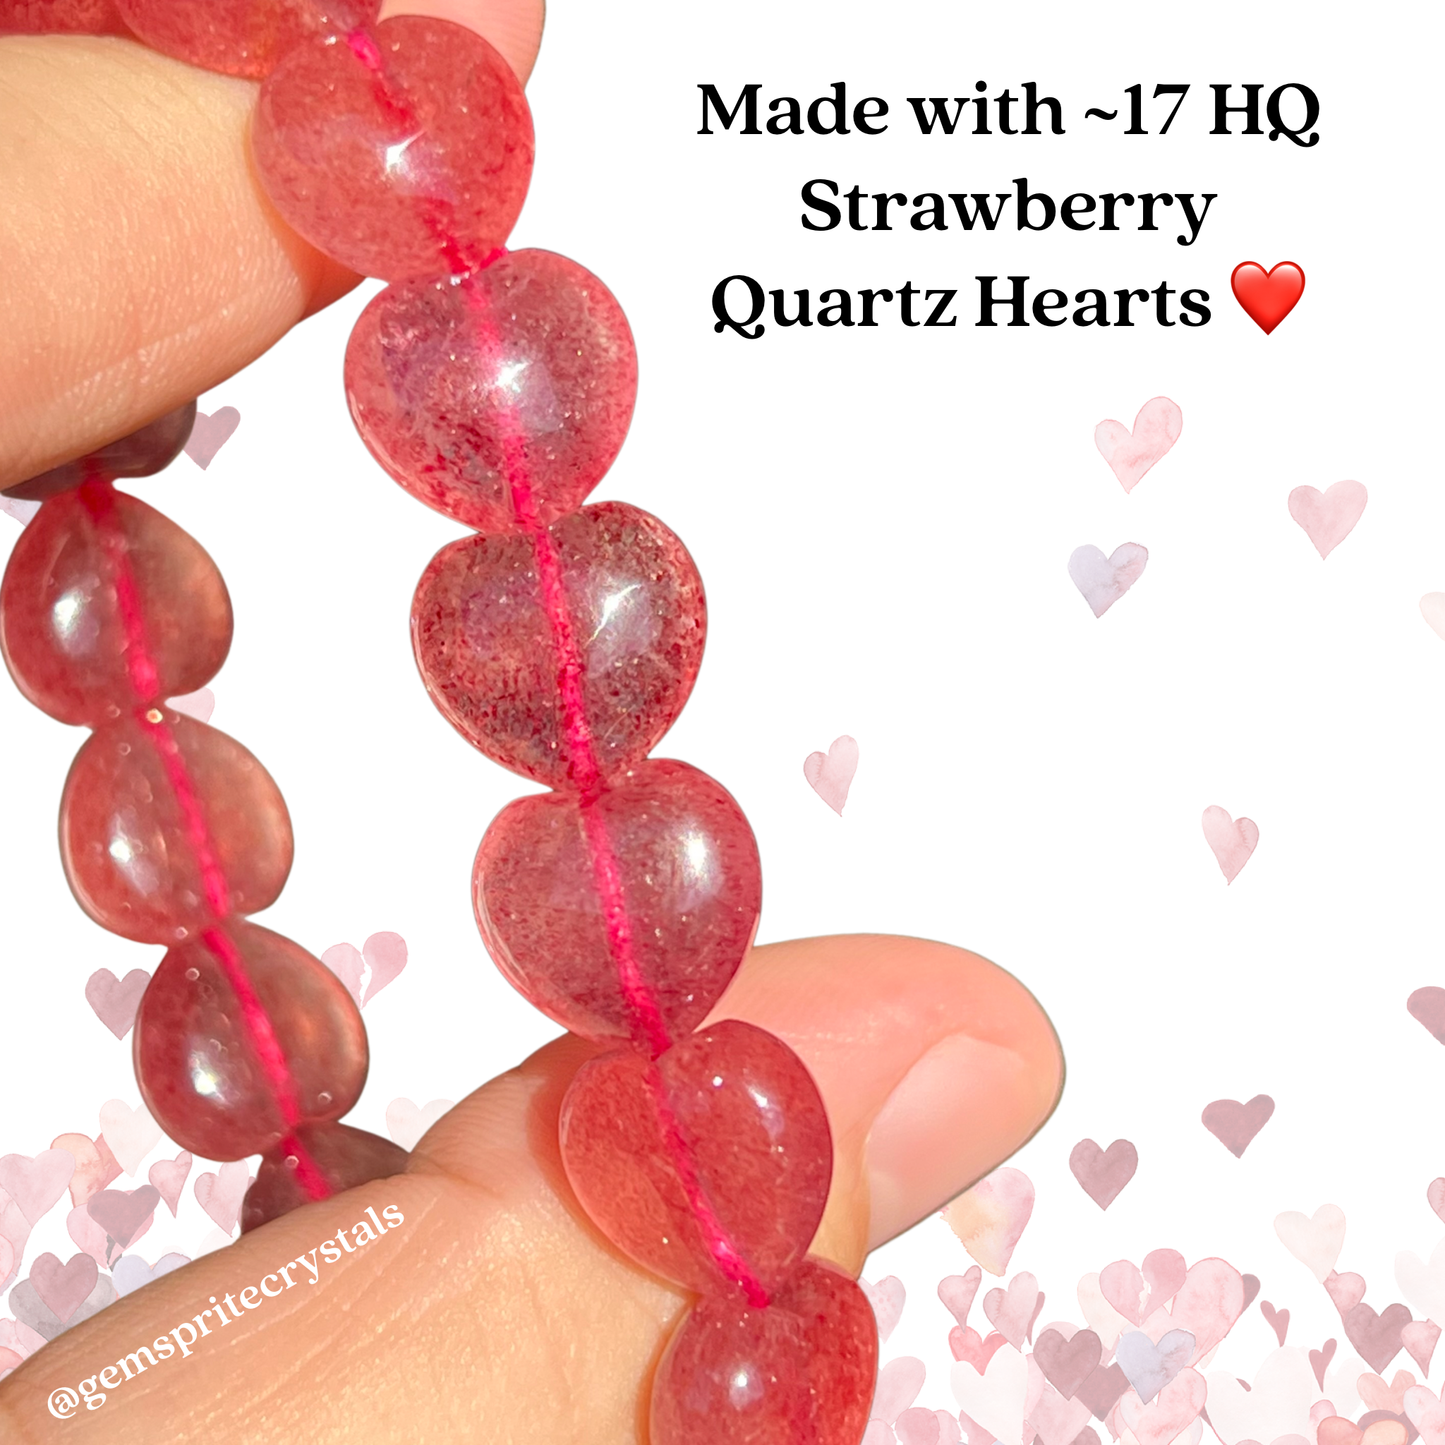 Strawberry Quartz Heart Bracelet